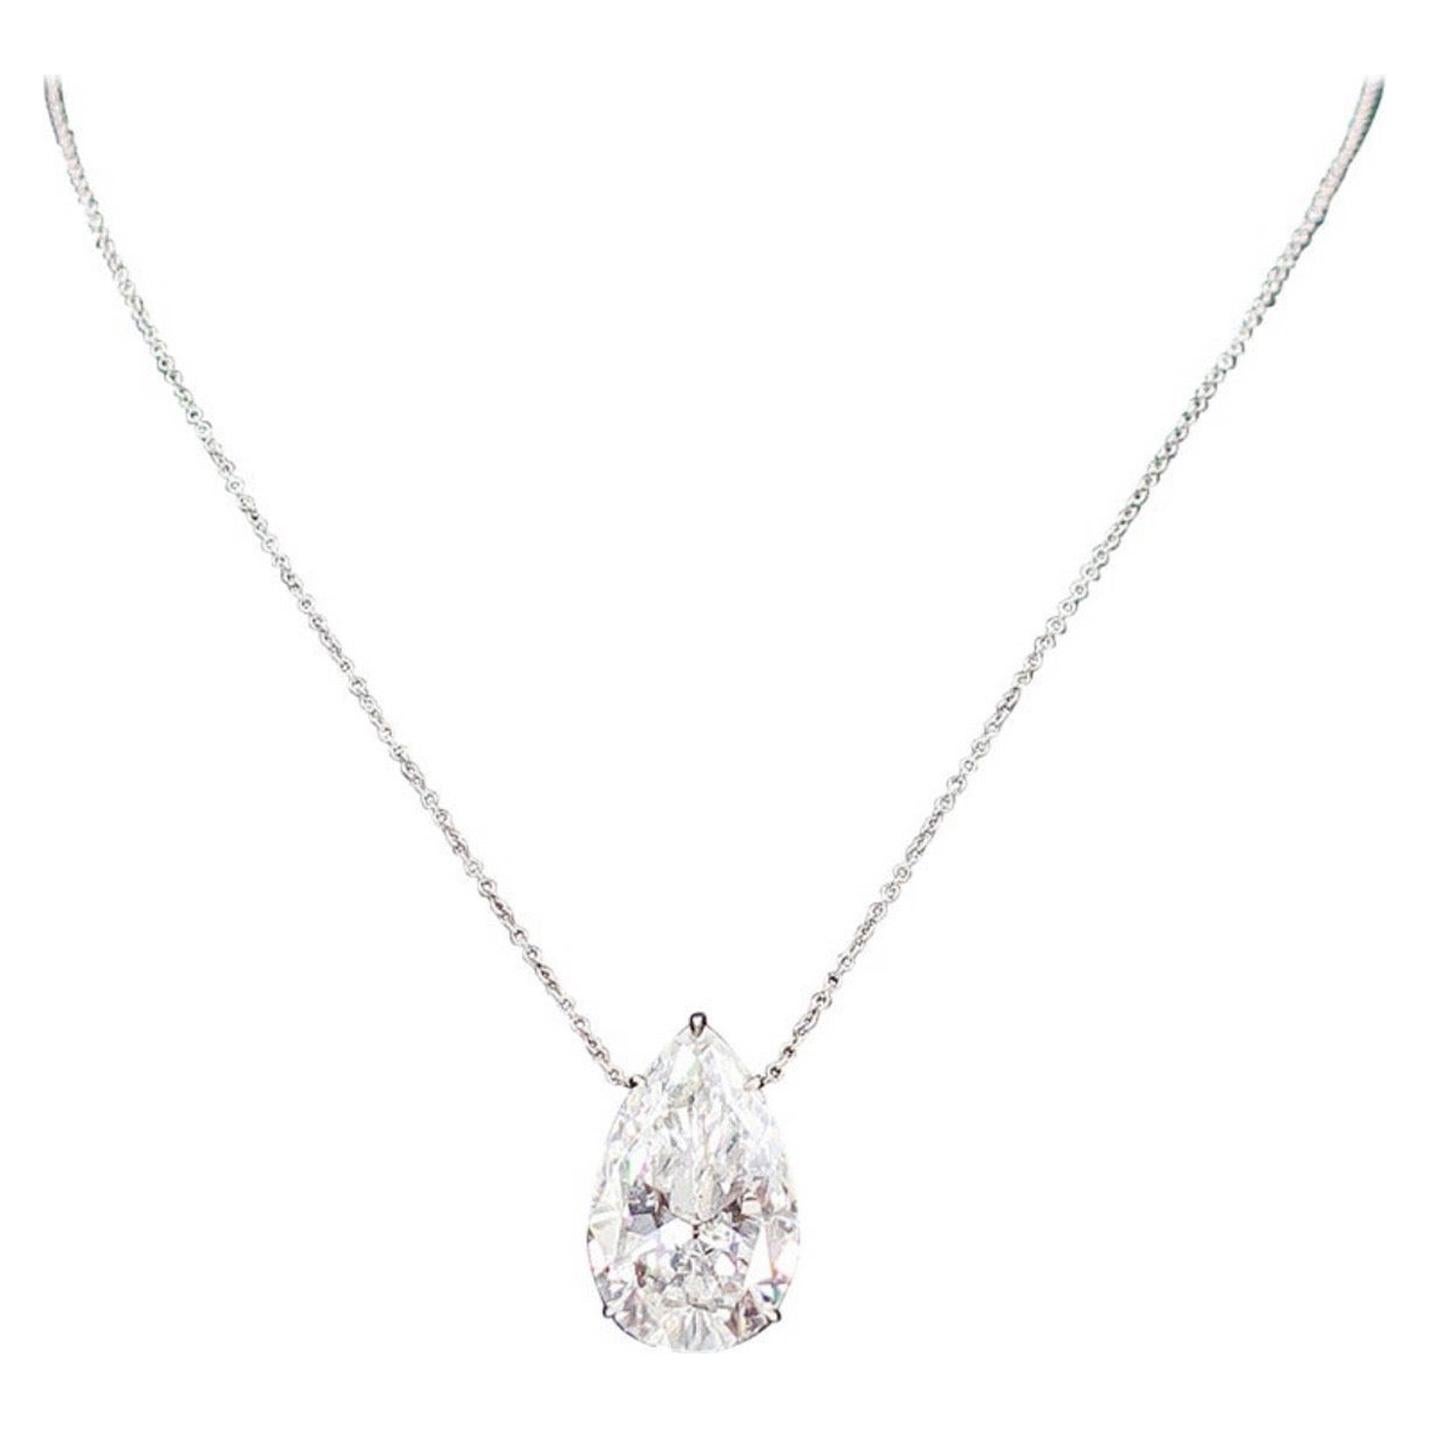 Issac Nussbaum GIA Certified 3.82 Carat Pear Shape Diamond Pendant Necklace For Sale